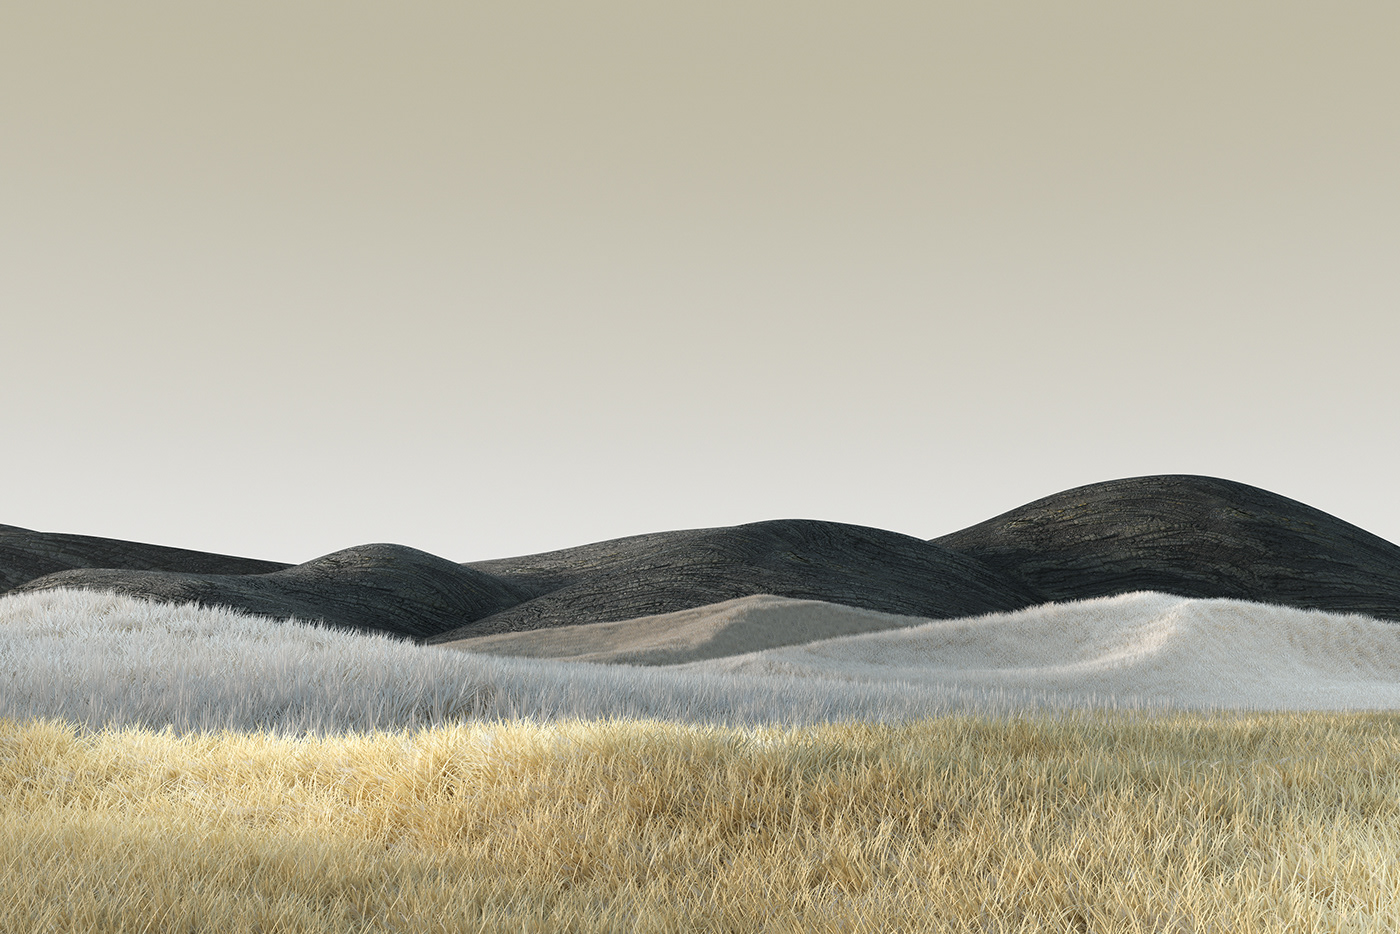 design Landscape wallpaper backgrounds art digital CGI graphics digital illustration sixnfive